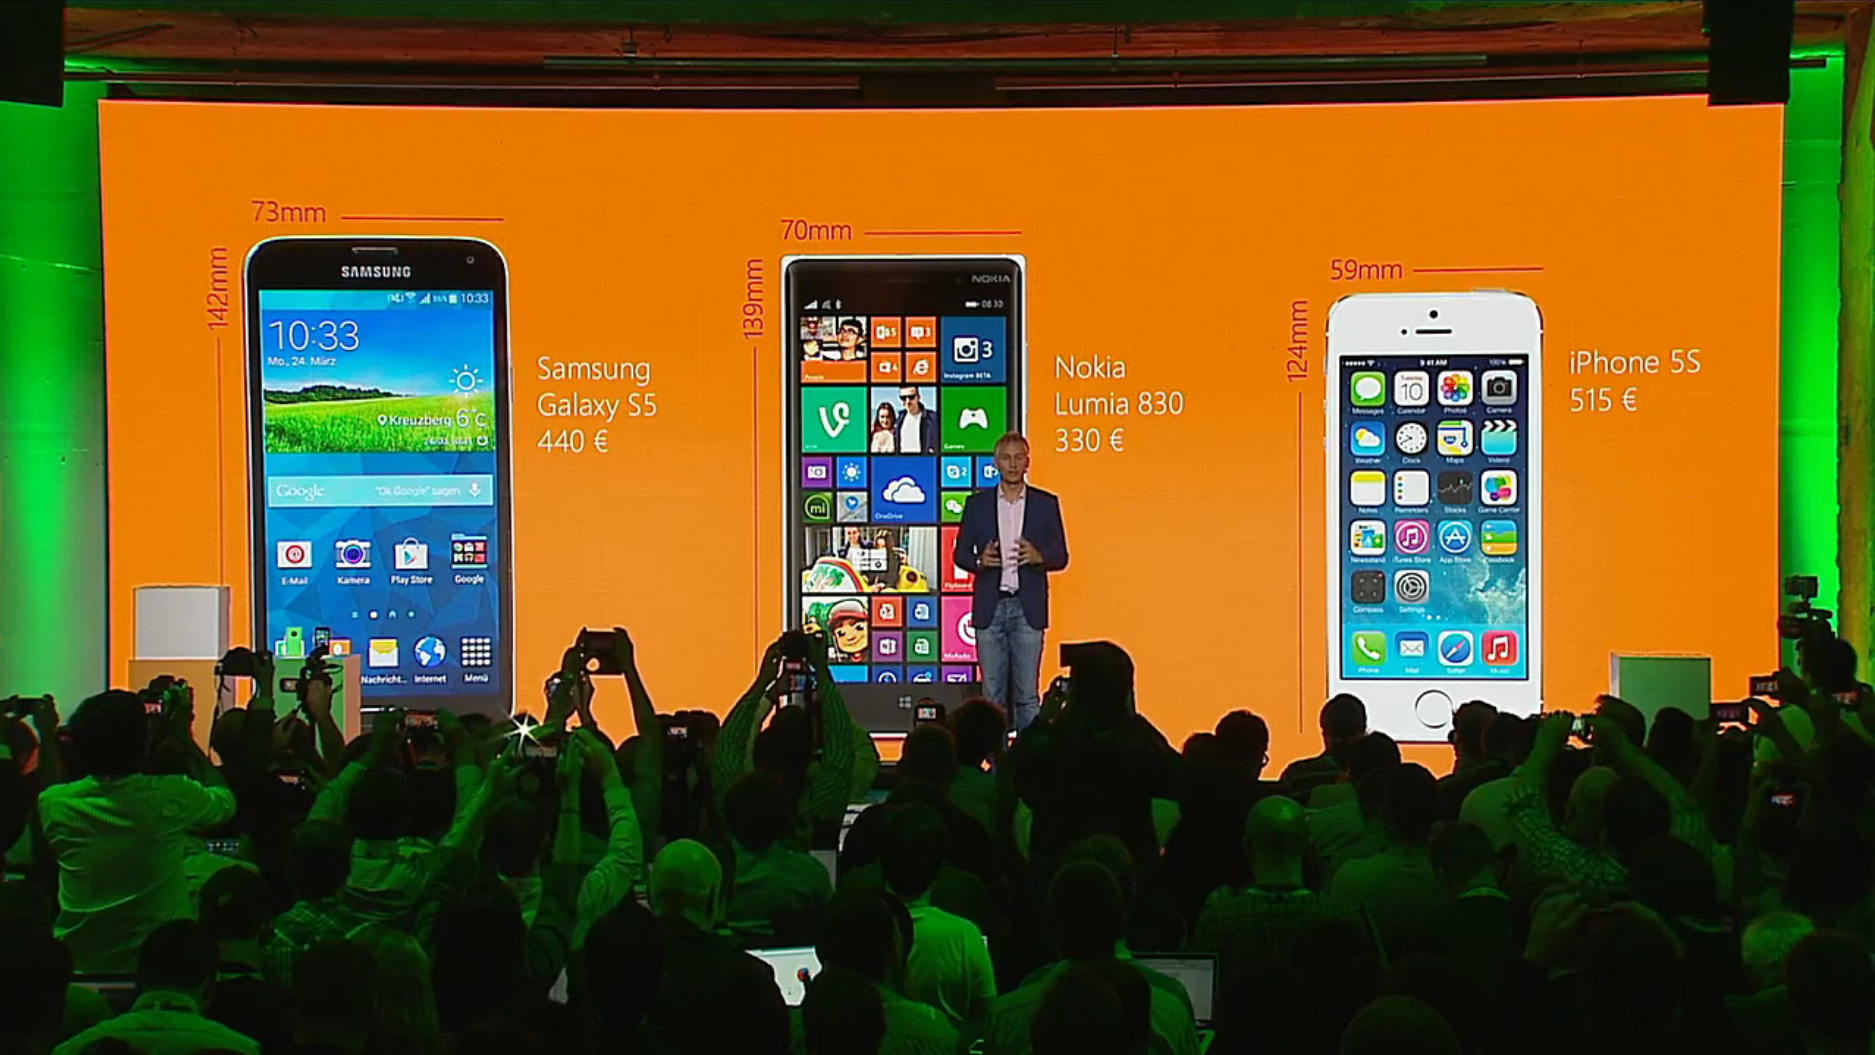 [IFA 2014] Nokia เปิดตัว Lumia 830, Lumia 735 และ Lumia 730 Dual SIM ราคาโดนๆ แล้ว เริ่มขายในเดือนนี้